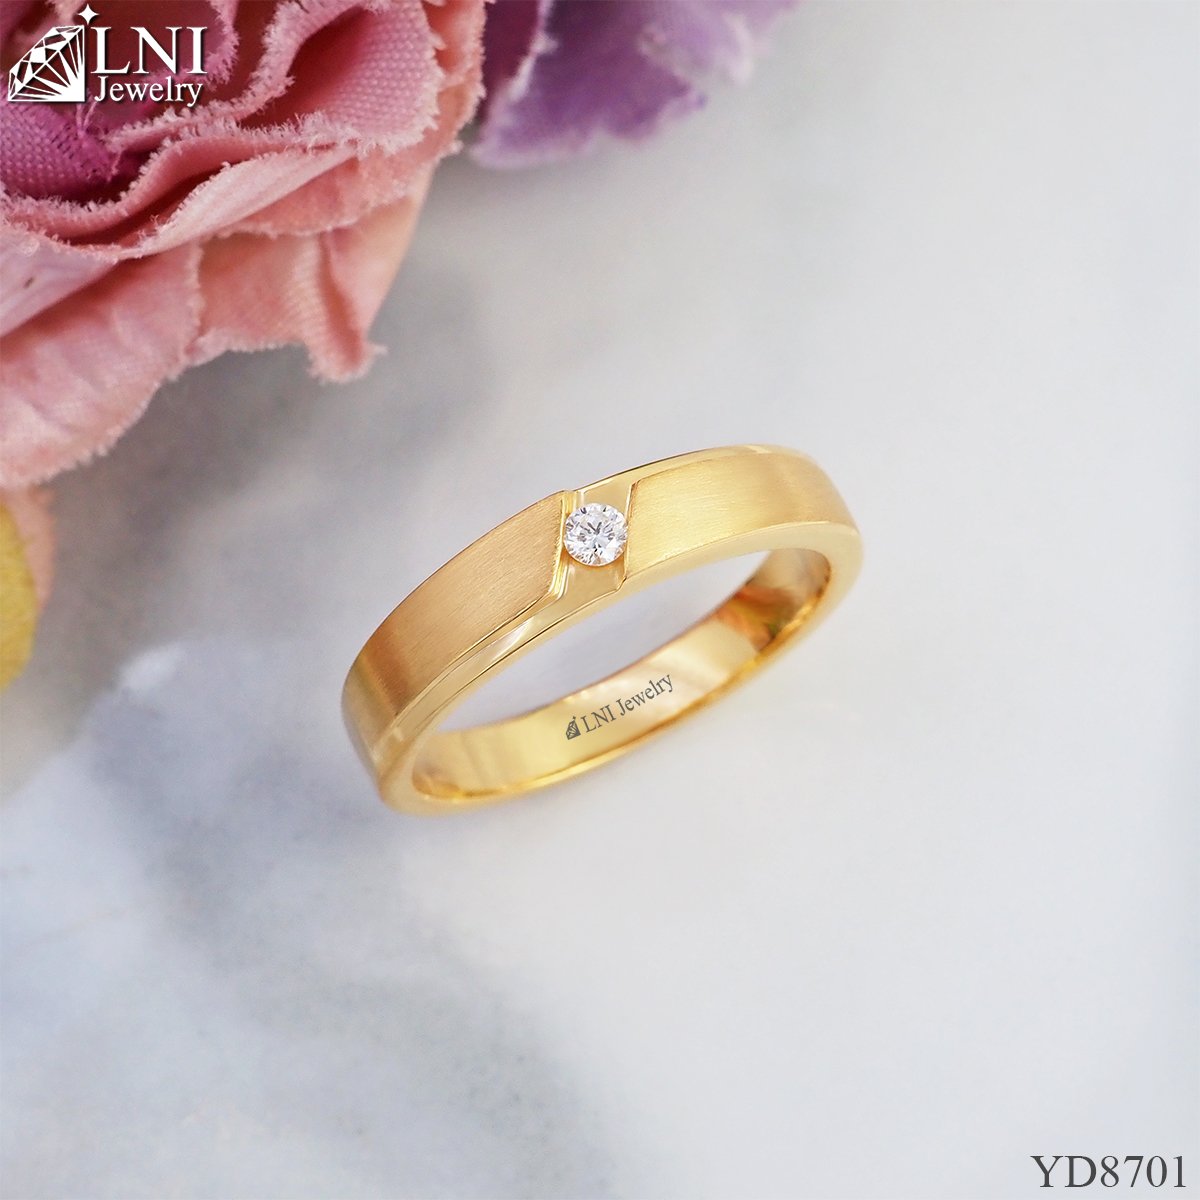 YD8701 Single Diamond Ring